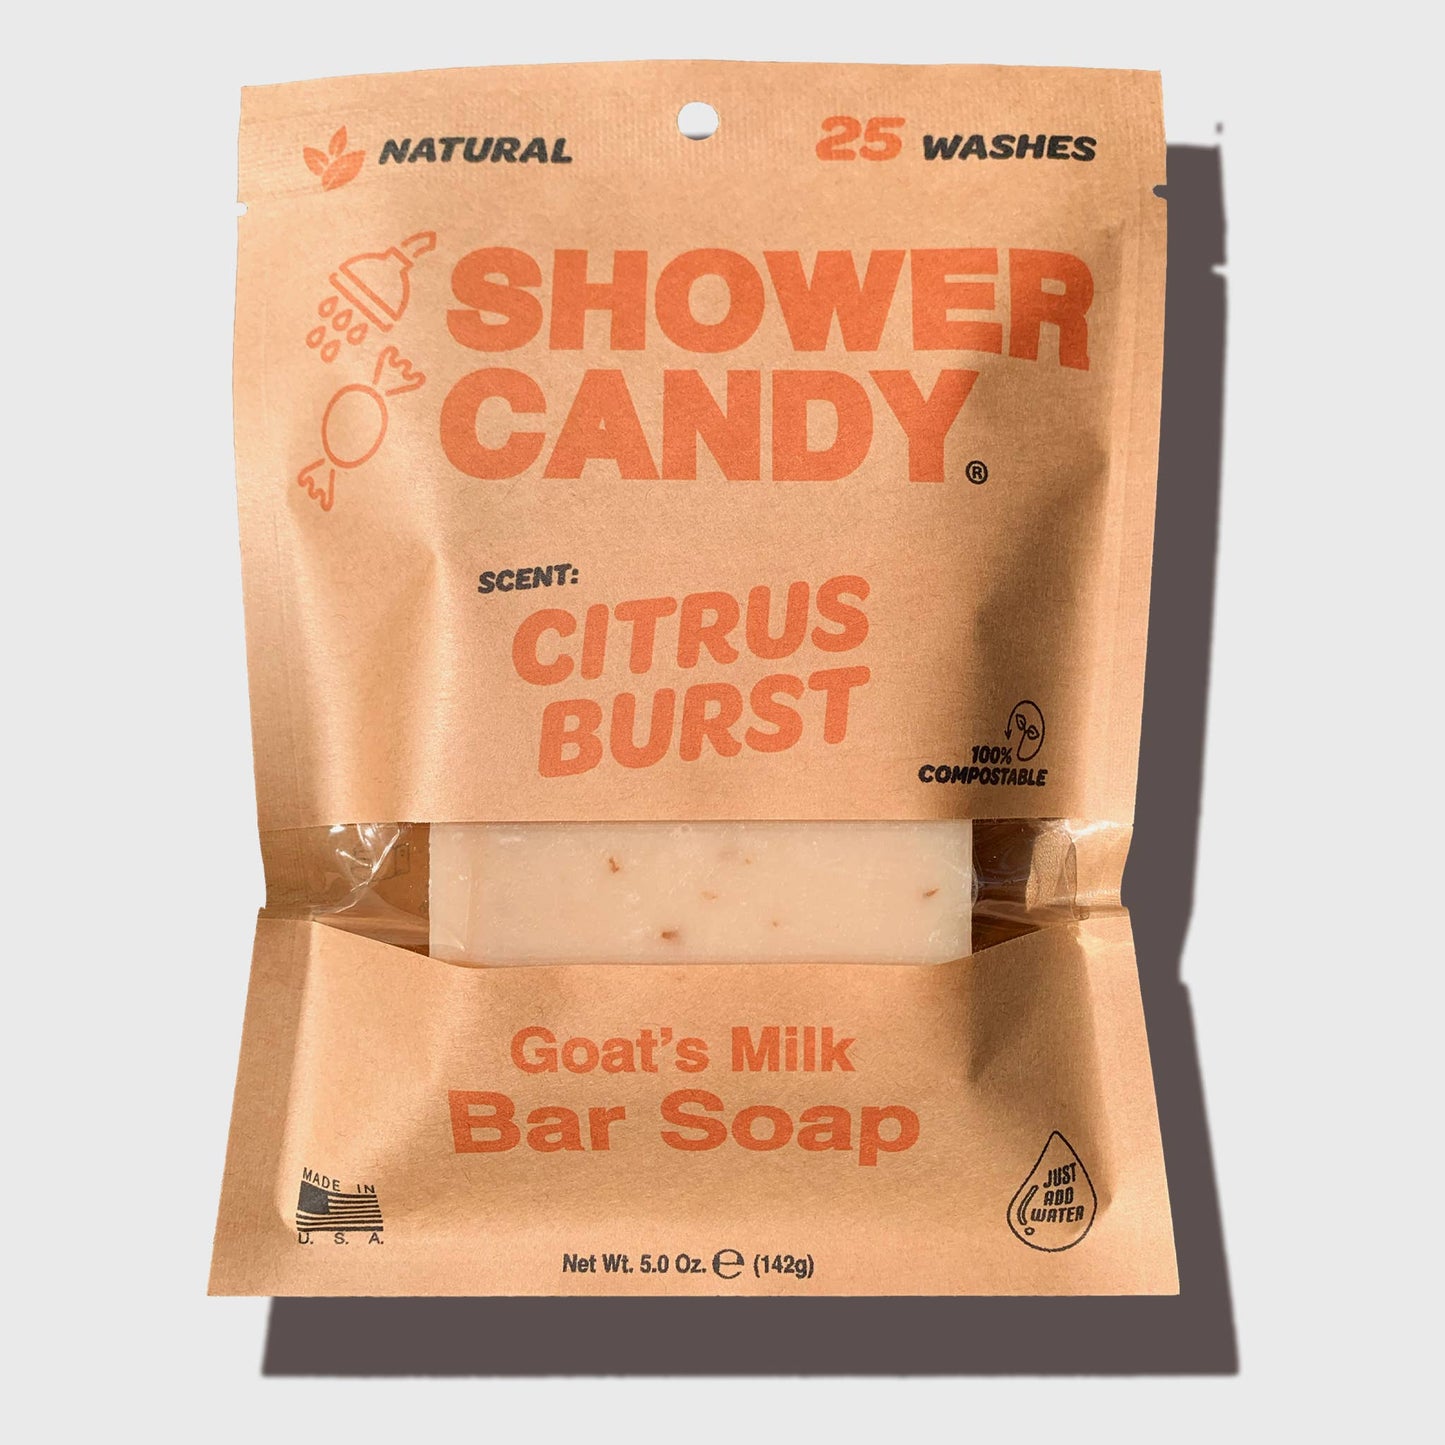 Shower Candy - Citrus Burst Body Wash Bar Soap with Goat's Milk